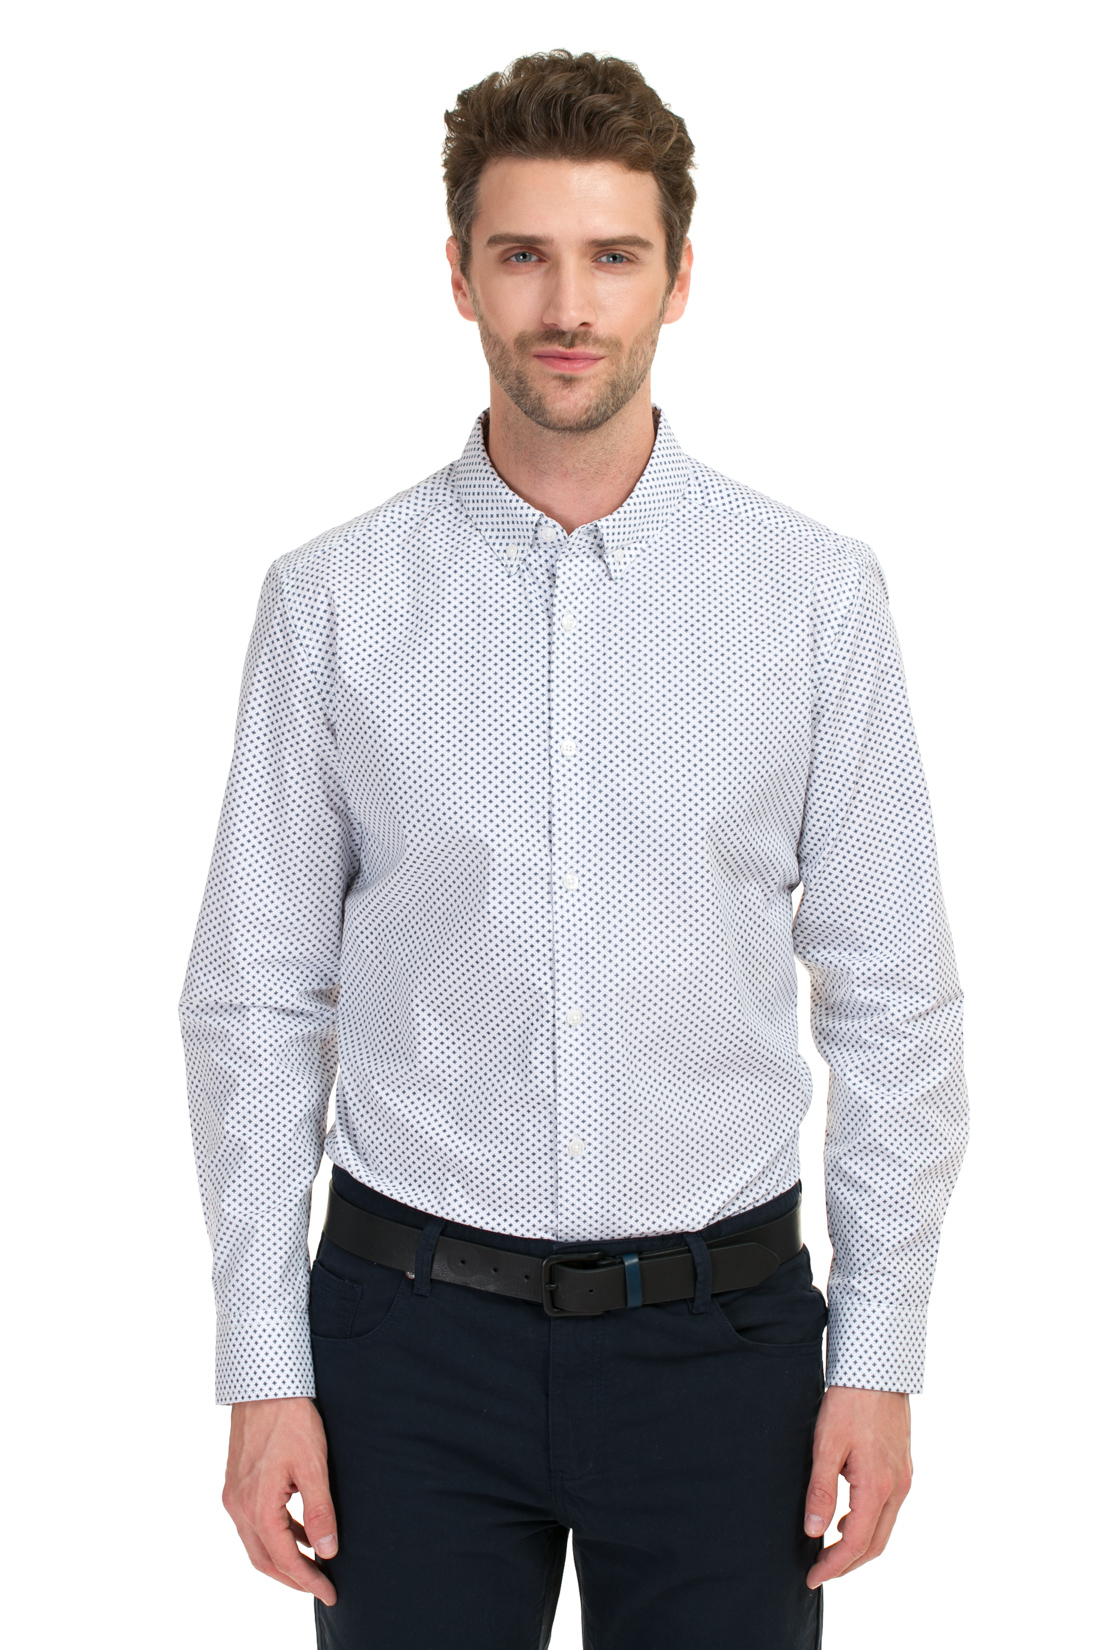 Рубашка с мелким принтом (арт. baon B667020), размер XL, цвет white printed#белый